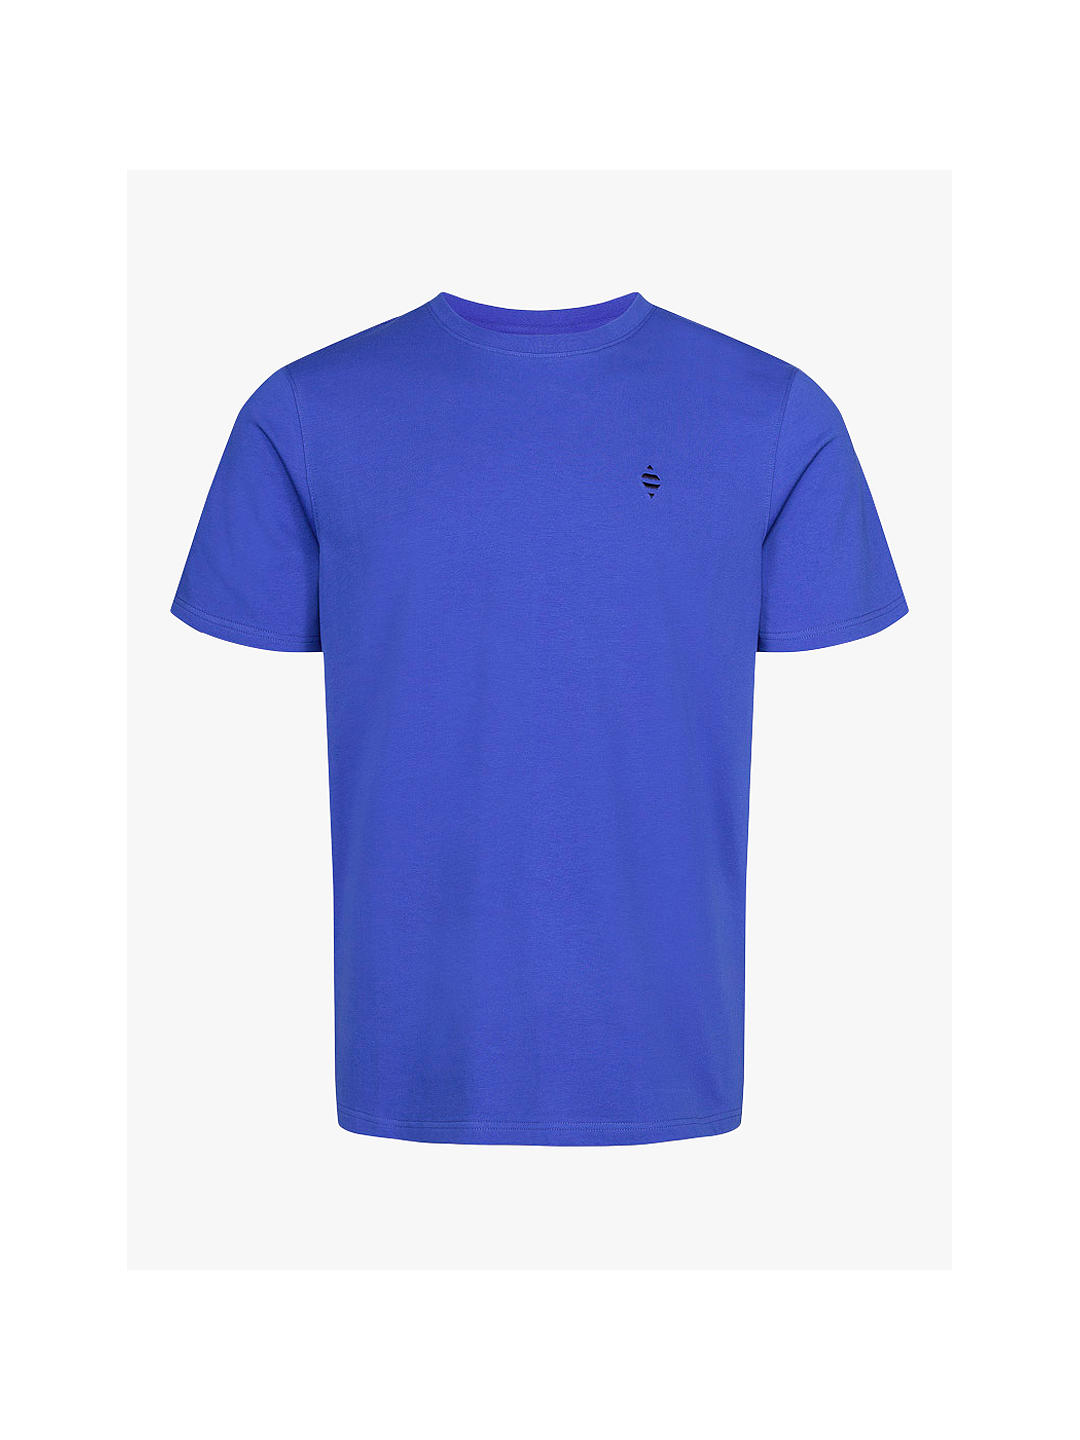 Panos Emporio Element T-Shirt, Dazzling Blue